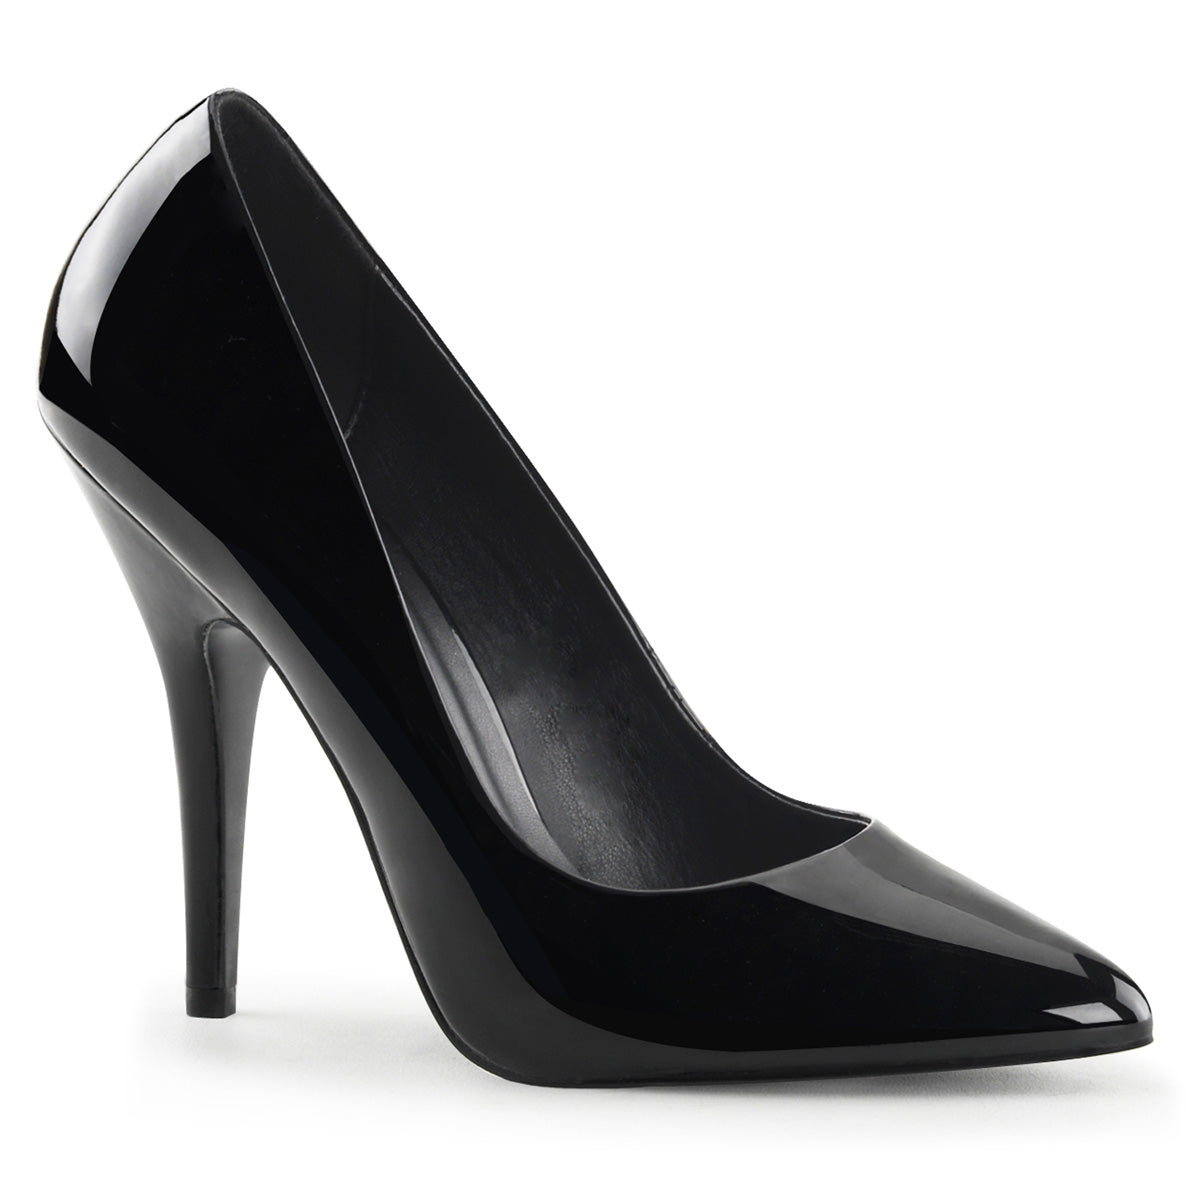 HSMQHJWE Heel Work Shoes Mid Heel Pumps For Women Pointed Toe Slip On  Wedding Office Pump 3 Inch Block High Heels Black,7.5) - Walmart.com